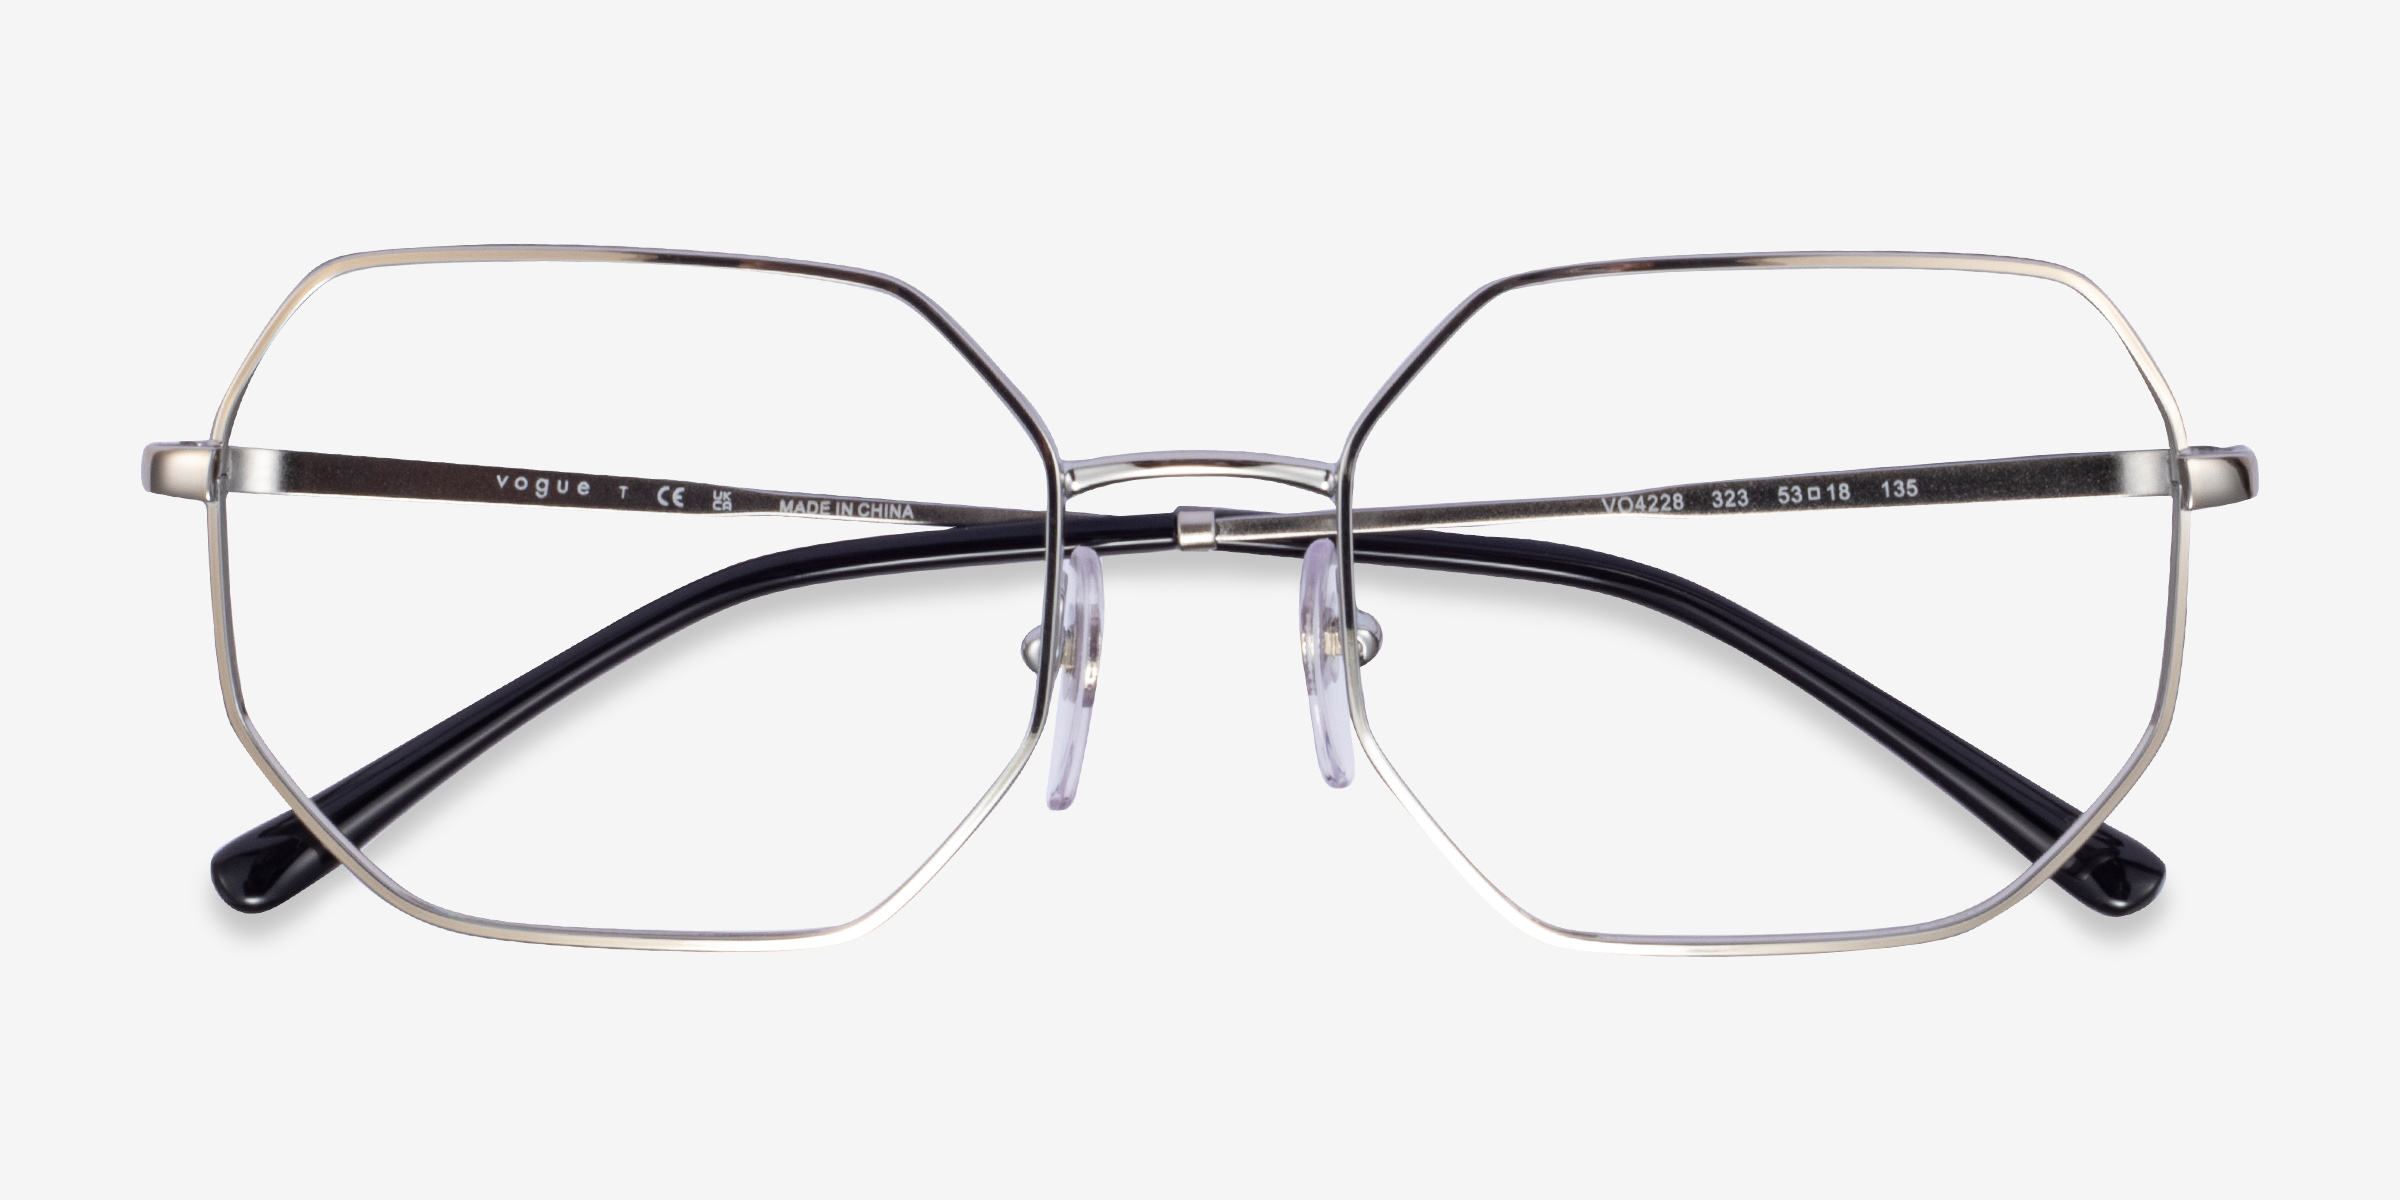 Vogue Eyewear Vo4228 Geometric Silver Frame Glasses For Women Eyebuydirect